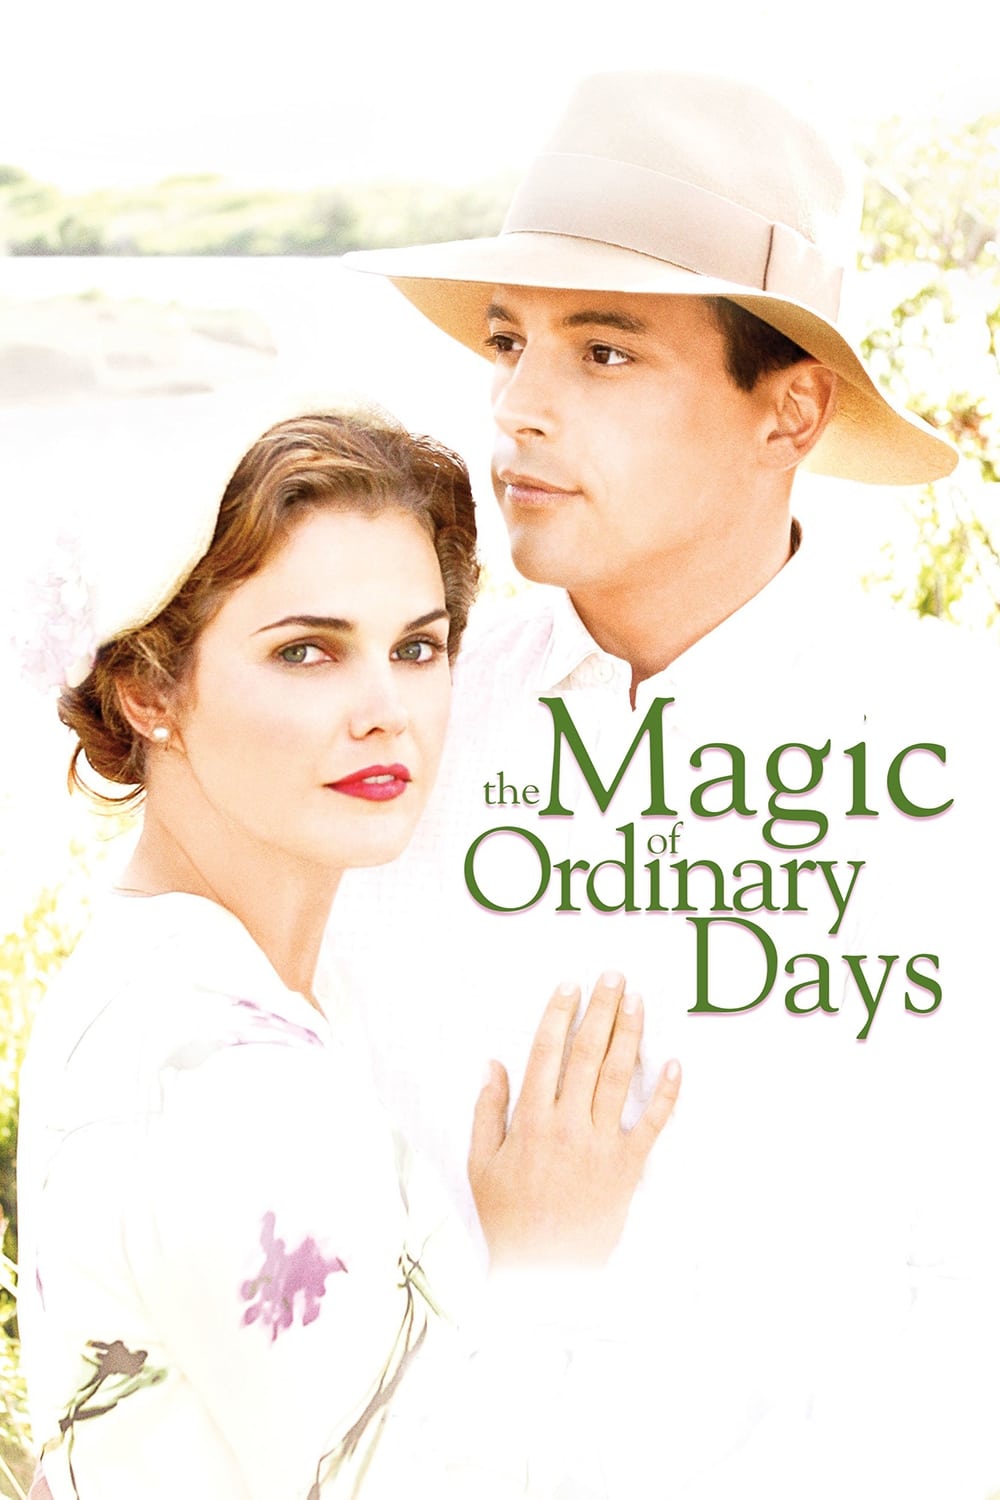 The Magic of Ordinary Days film